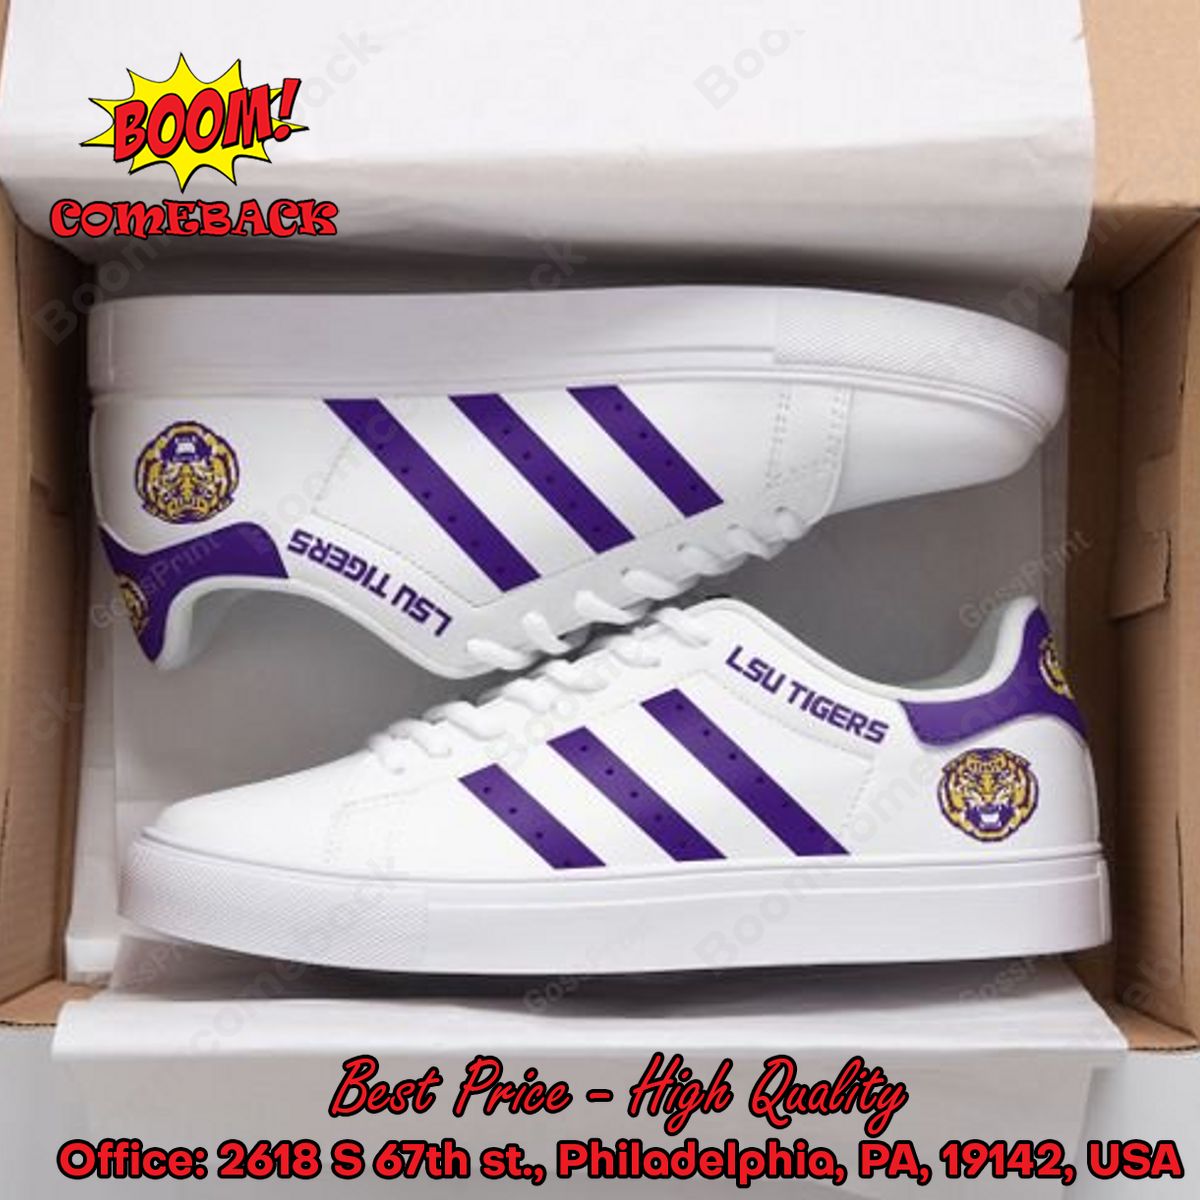 adidas stan smith purple